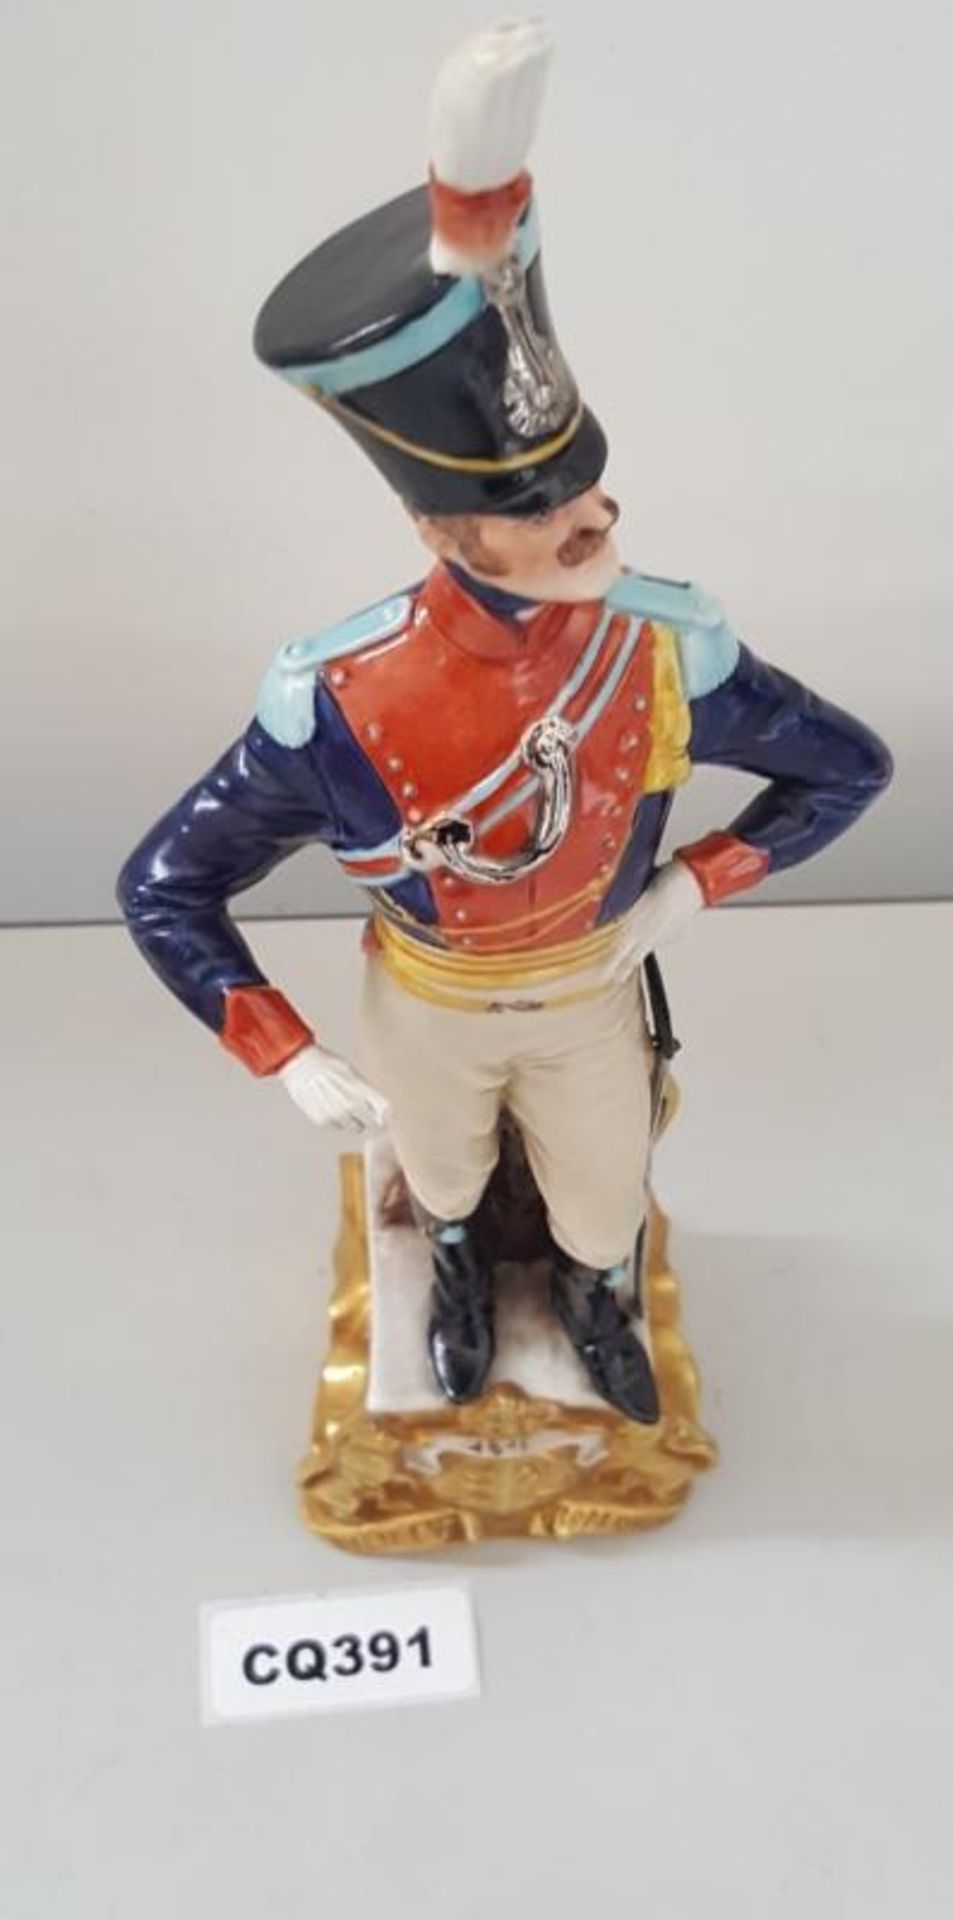 1 x Rare Italian Capodimonte Porcelain Bruno Merli Soldiers Figurines 1815 - Ref CQ391 E - Image 2 of 5